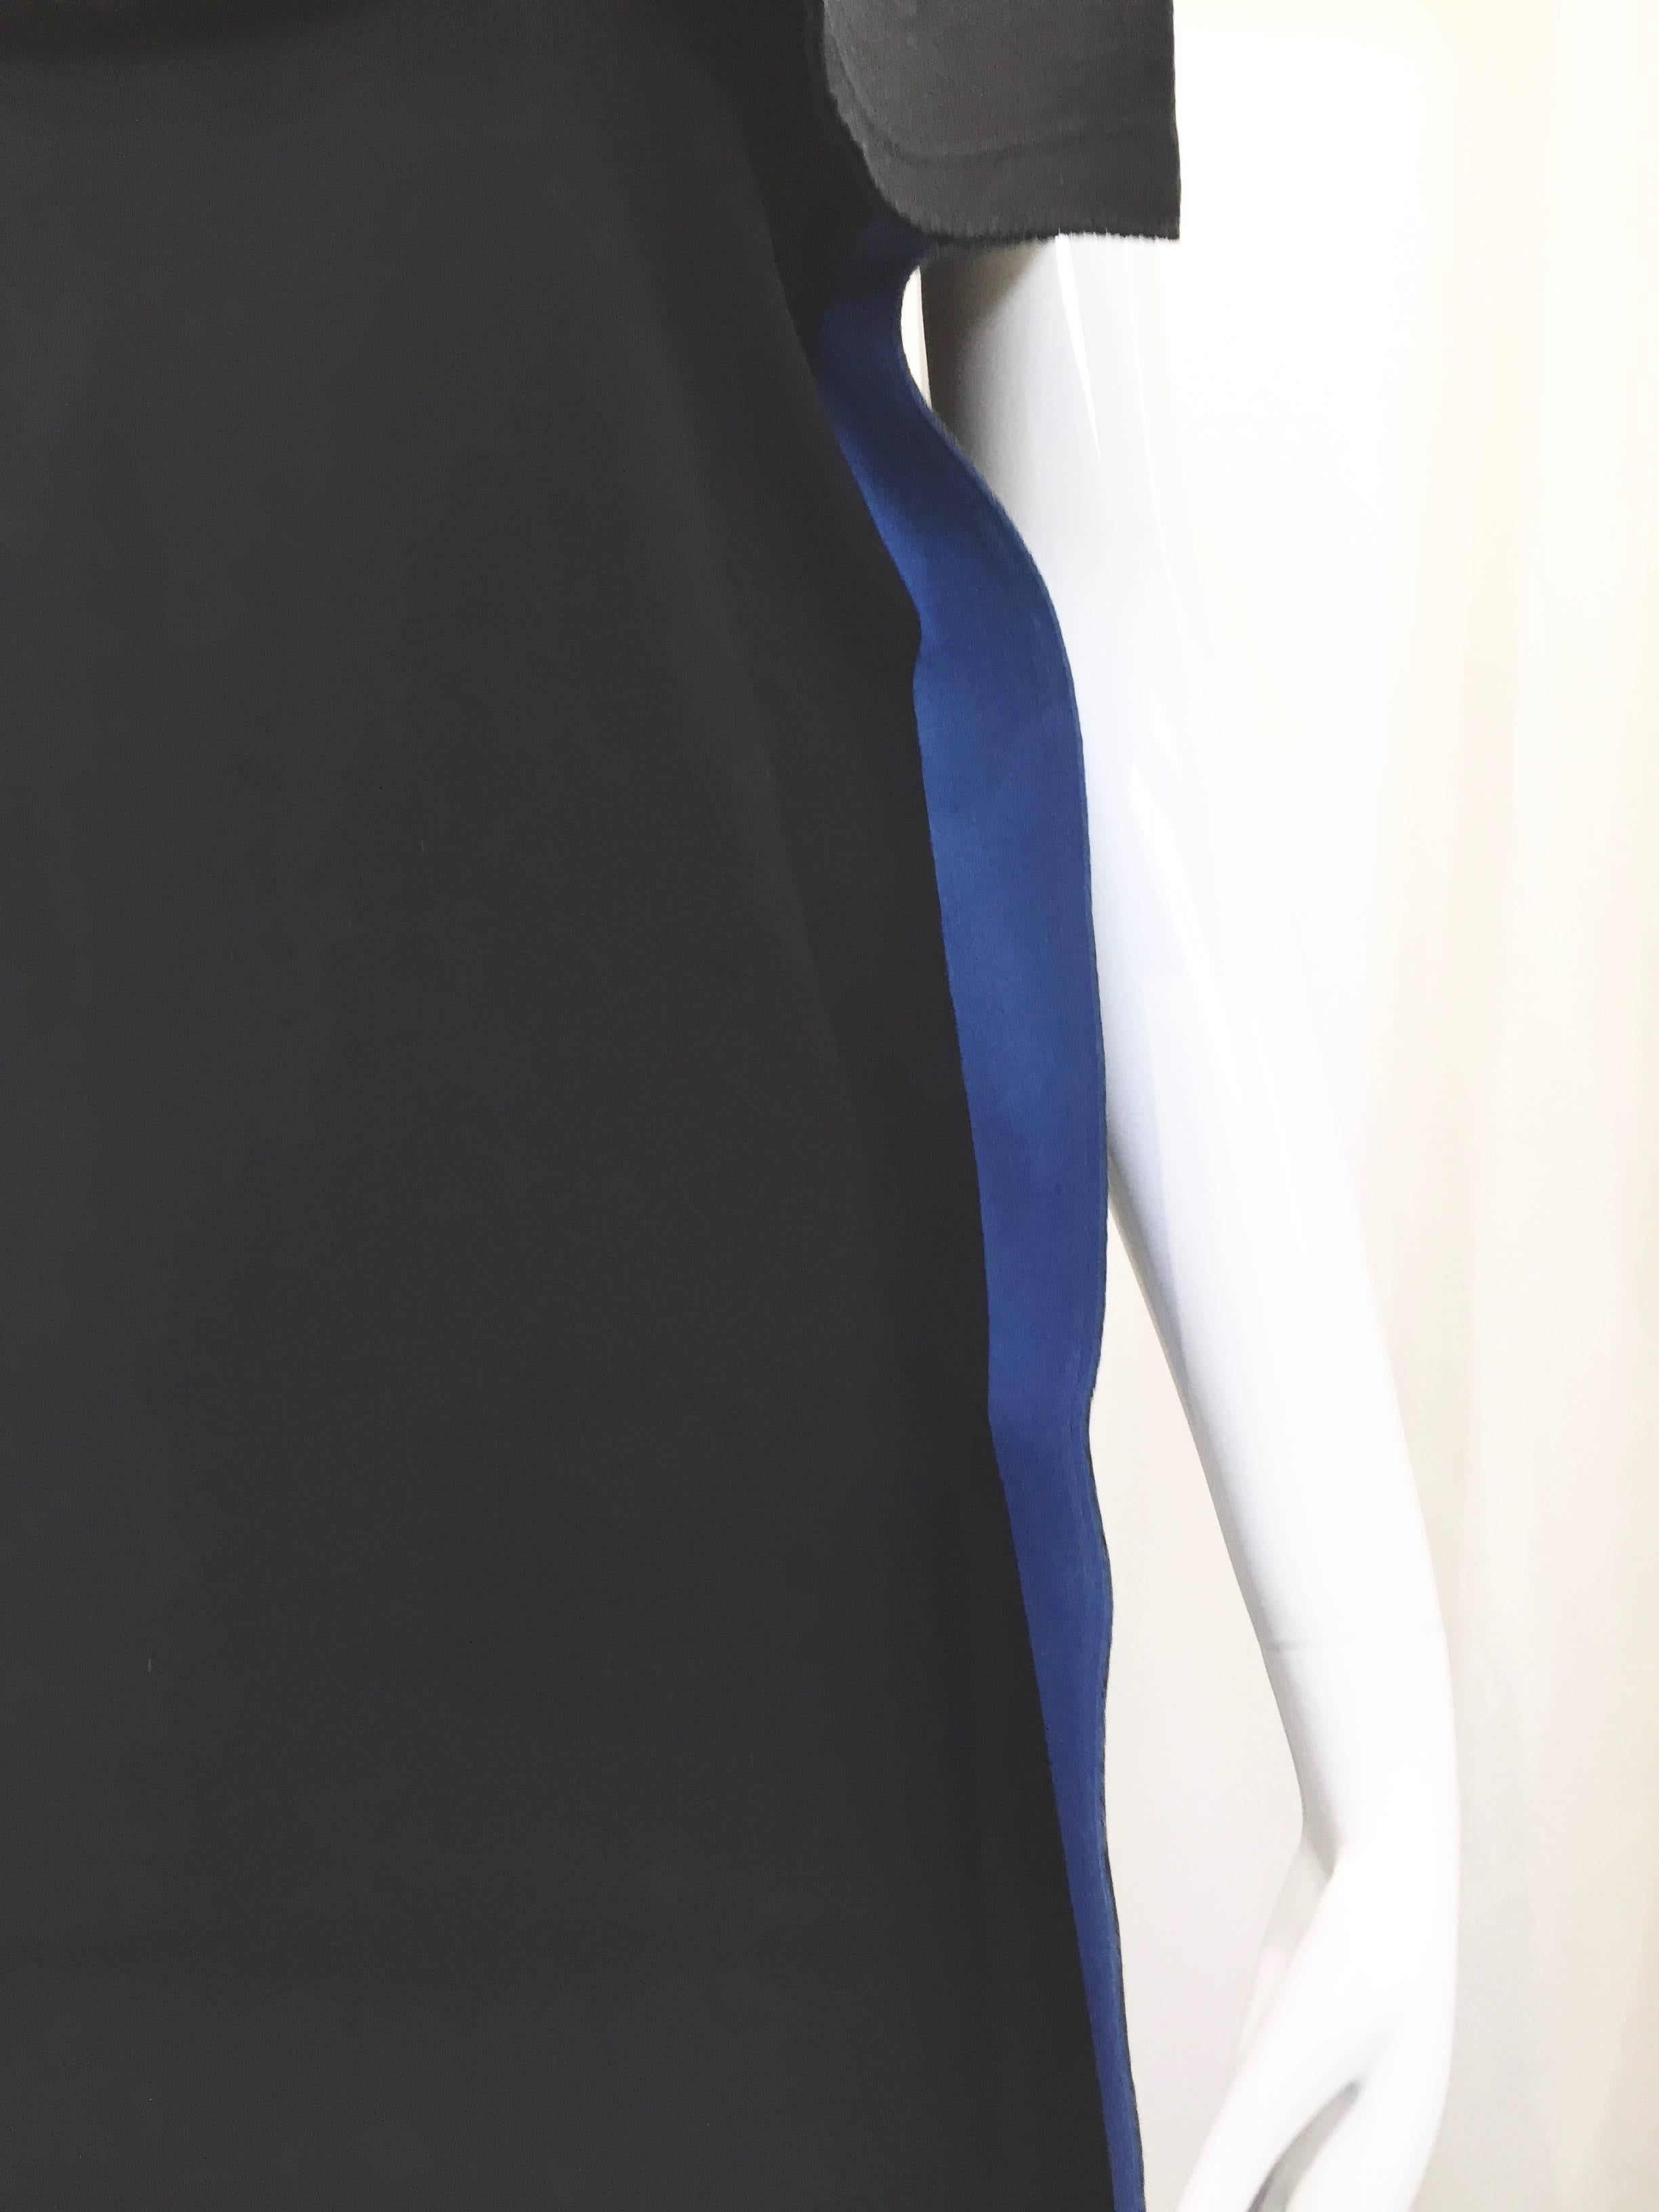 Black Rare Issey Miyake black and blue strapless  knit dress